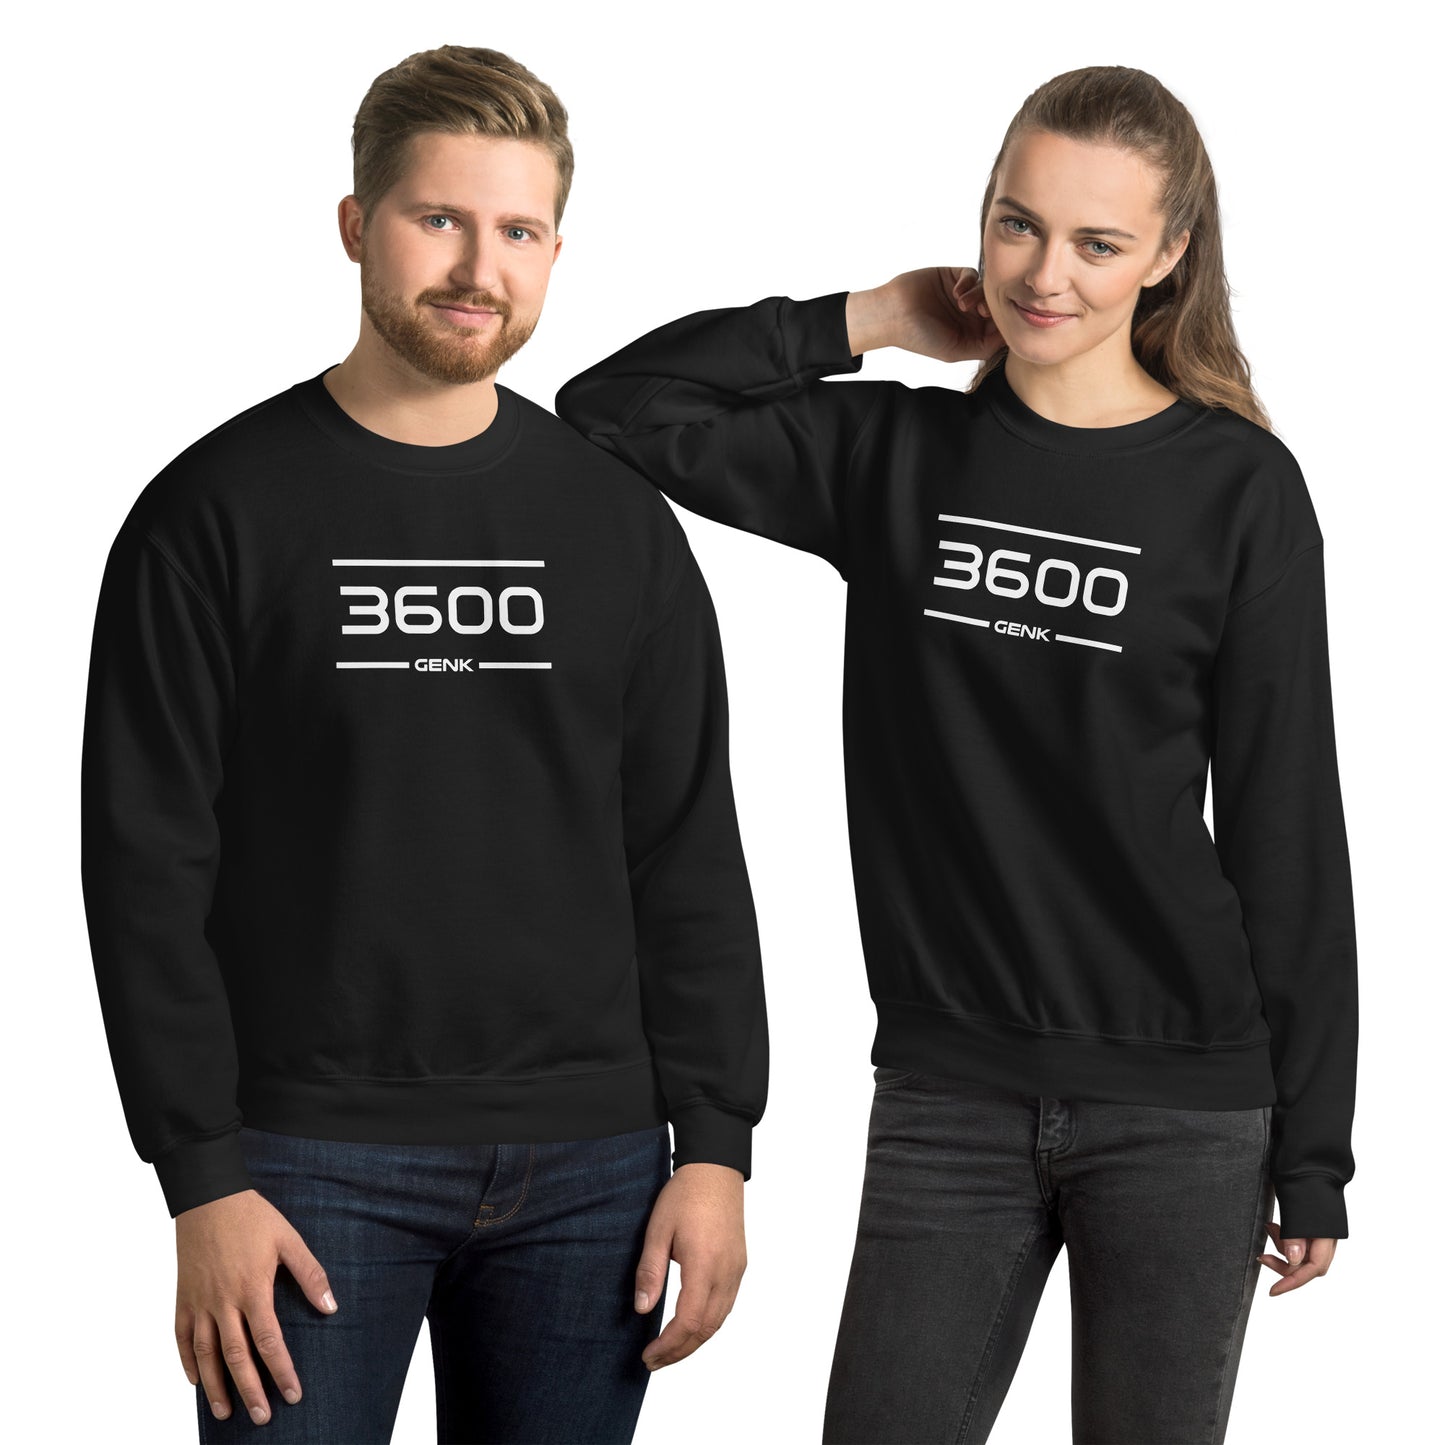 Sweater - 3600 - Genk (M/V)